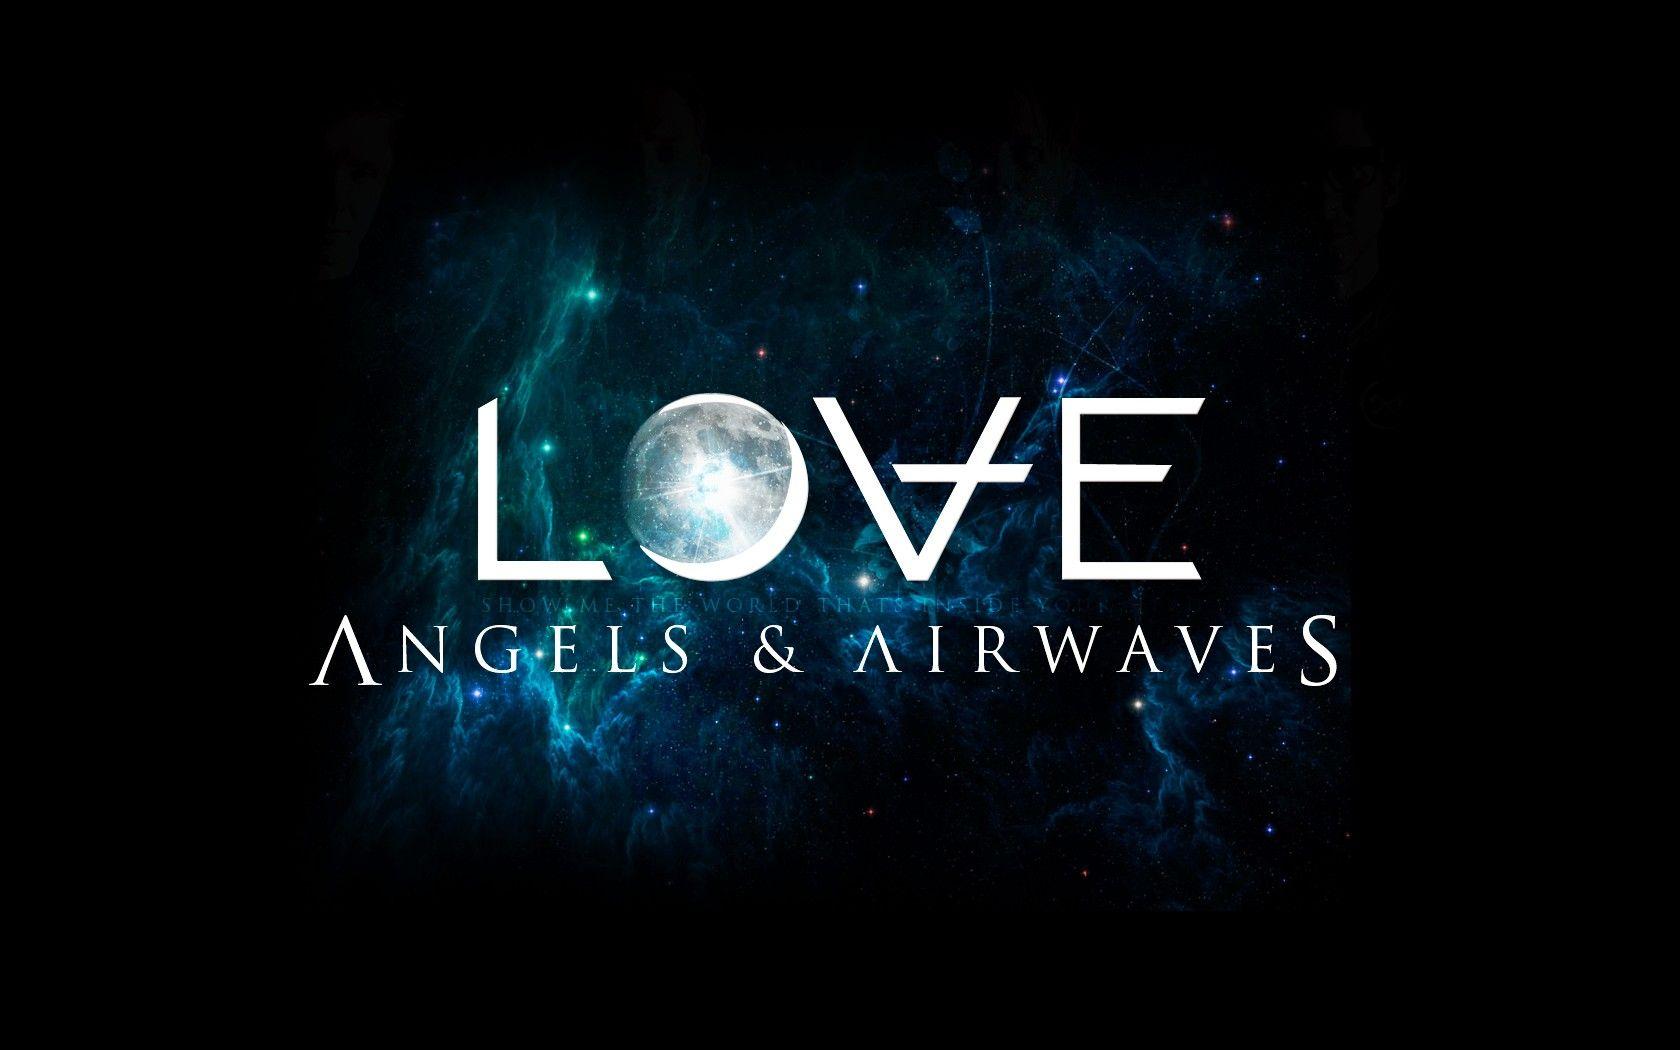 Angels And Airwaves Wallpaper, Fantastic Image of Angels